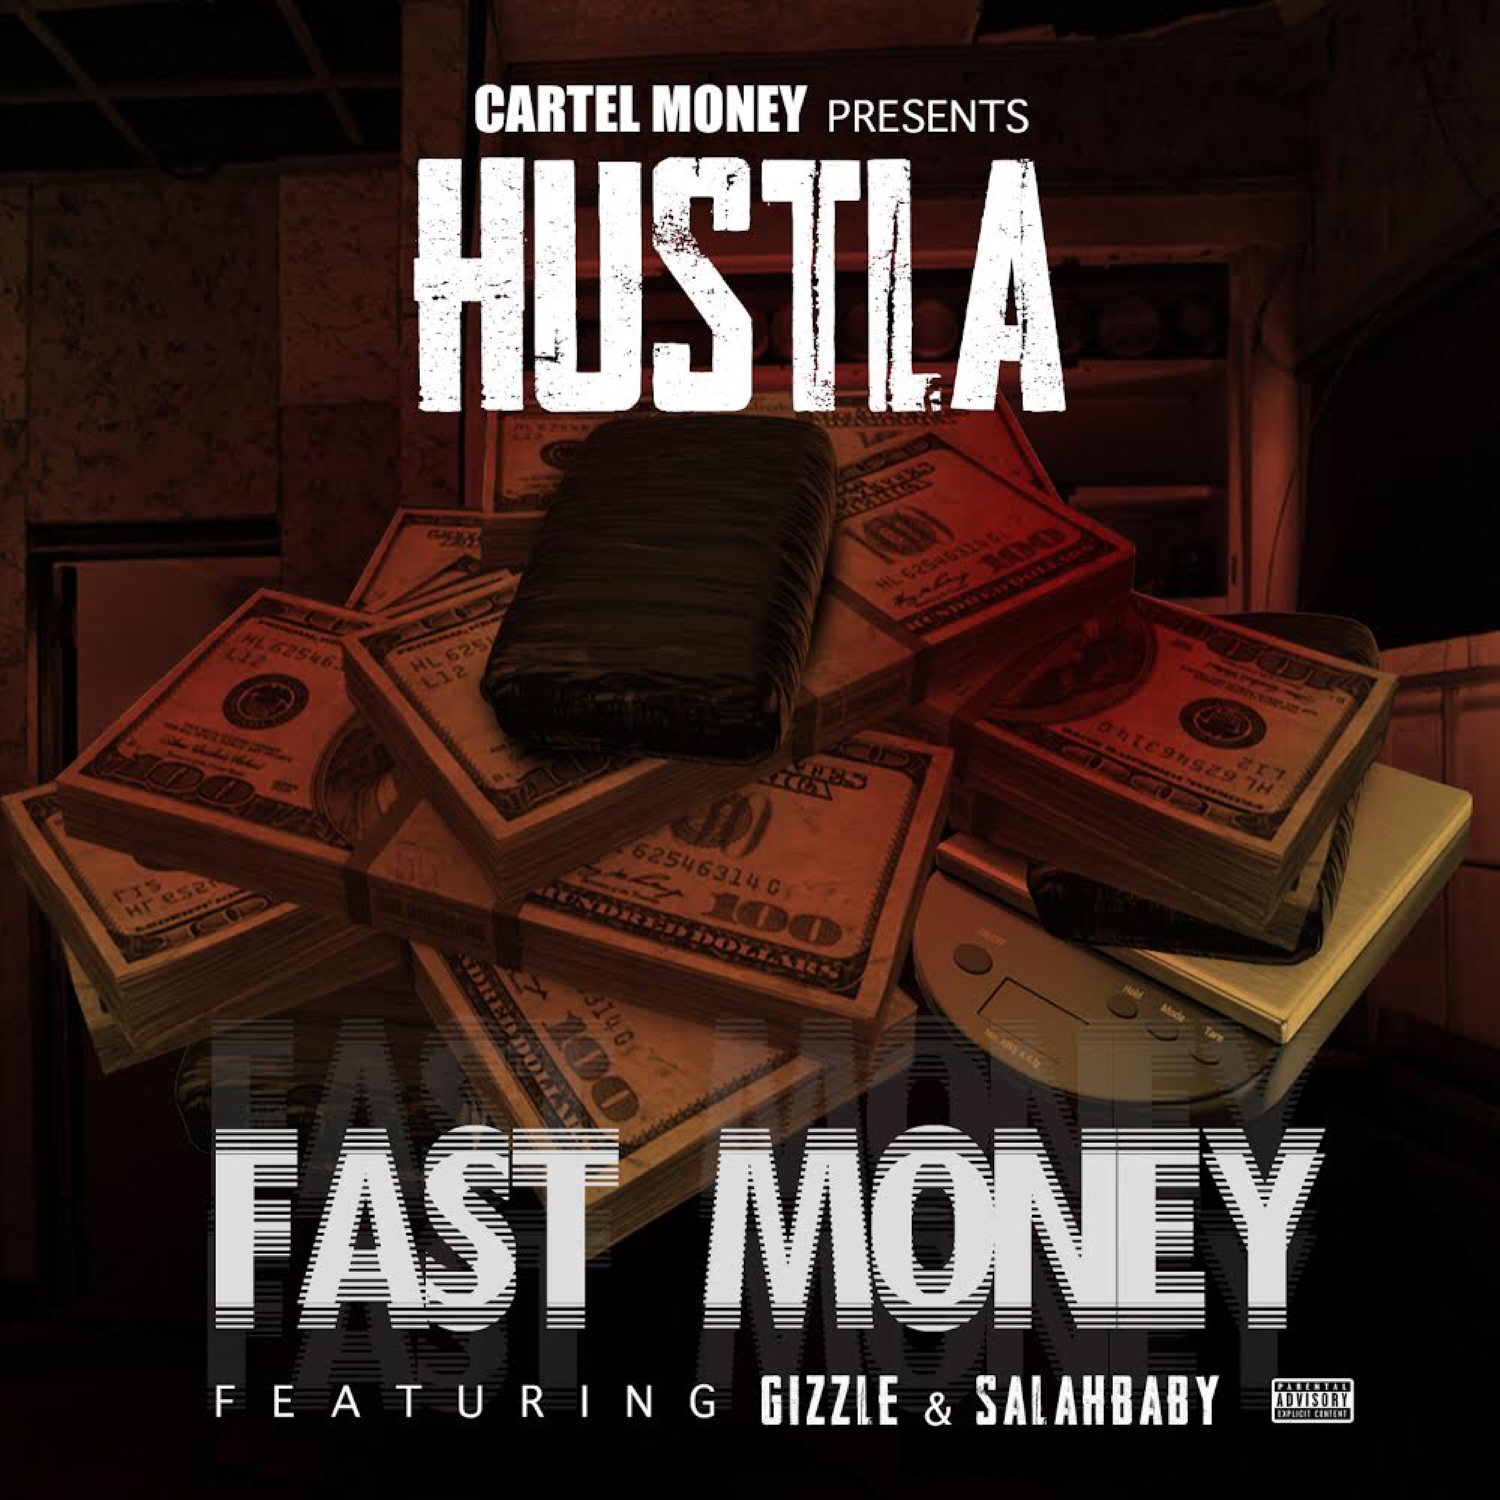 Fast Money (feat. Gizzle & SalahBaby)